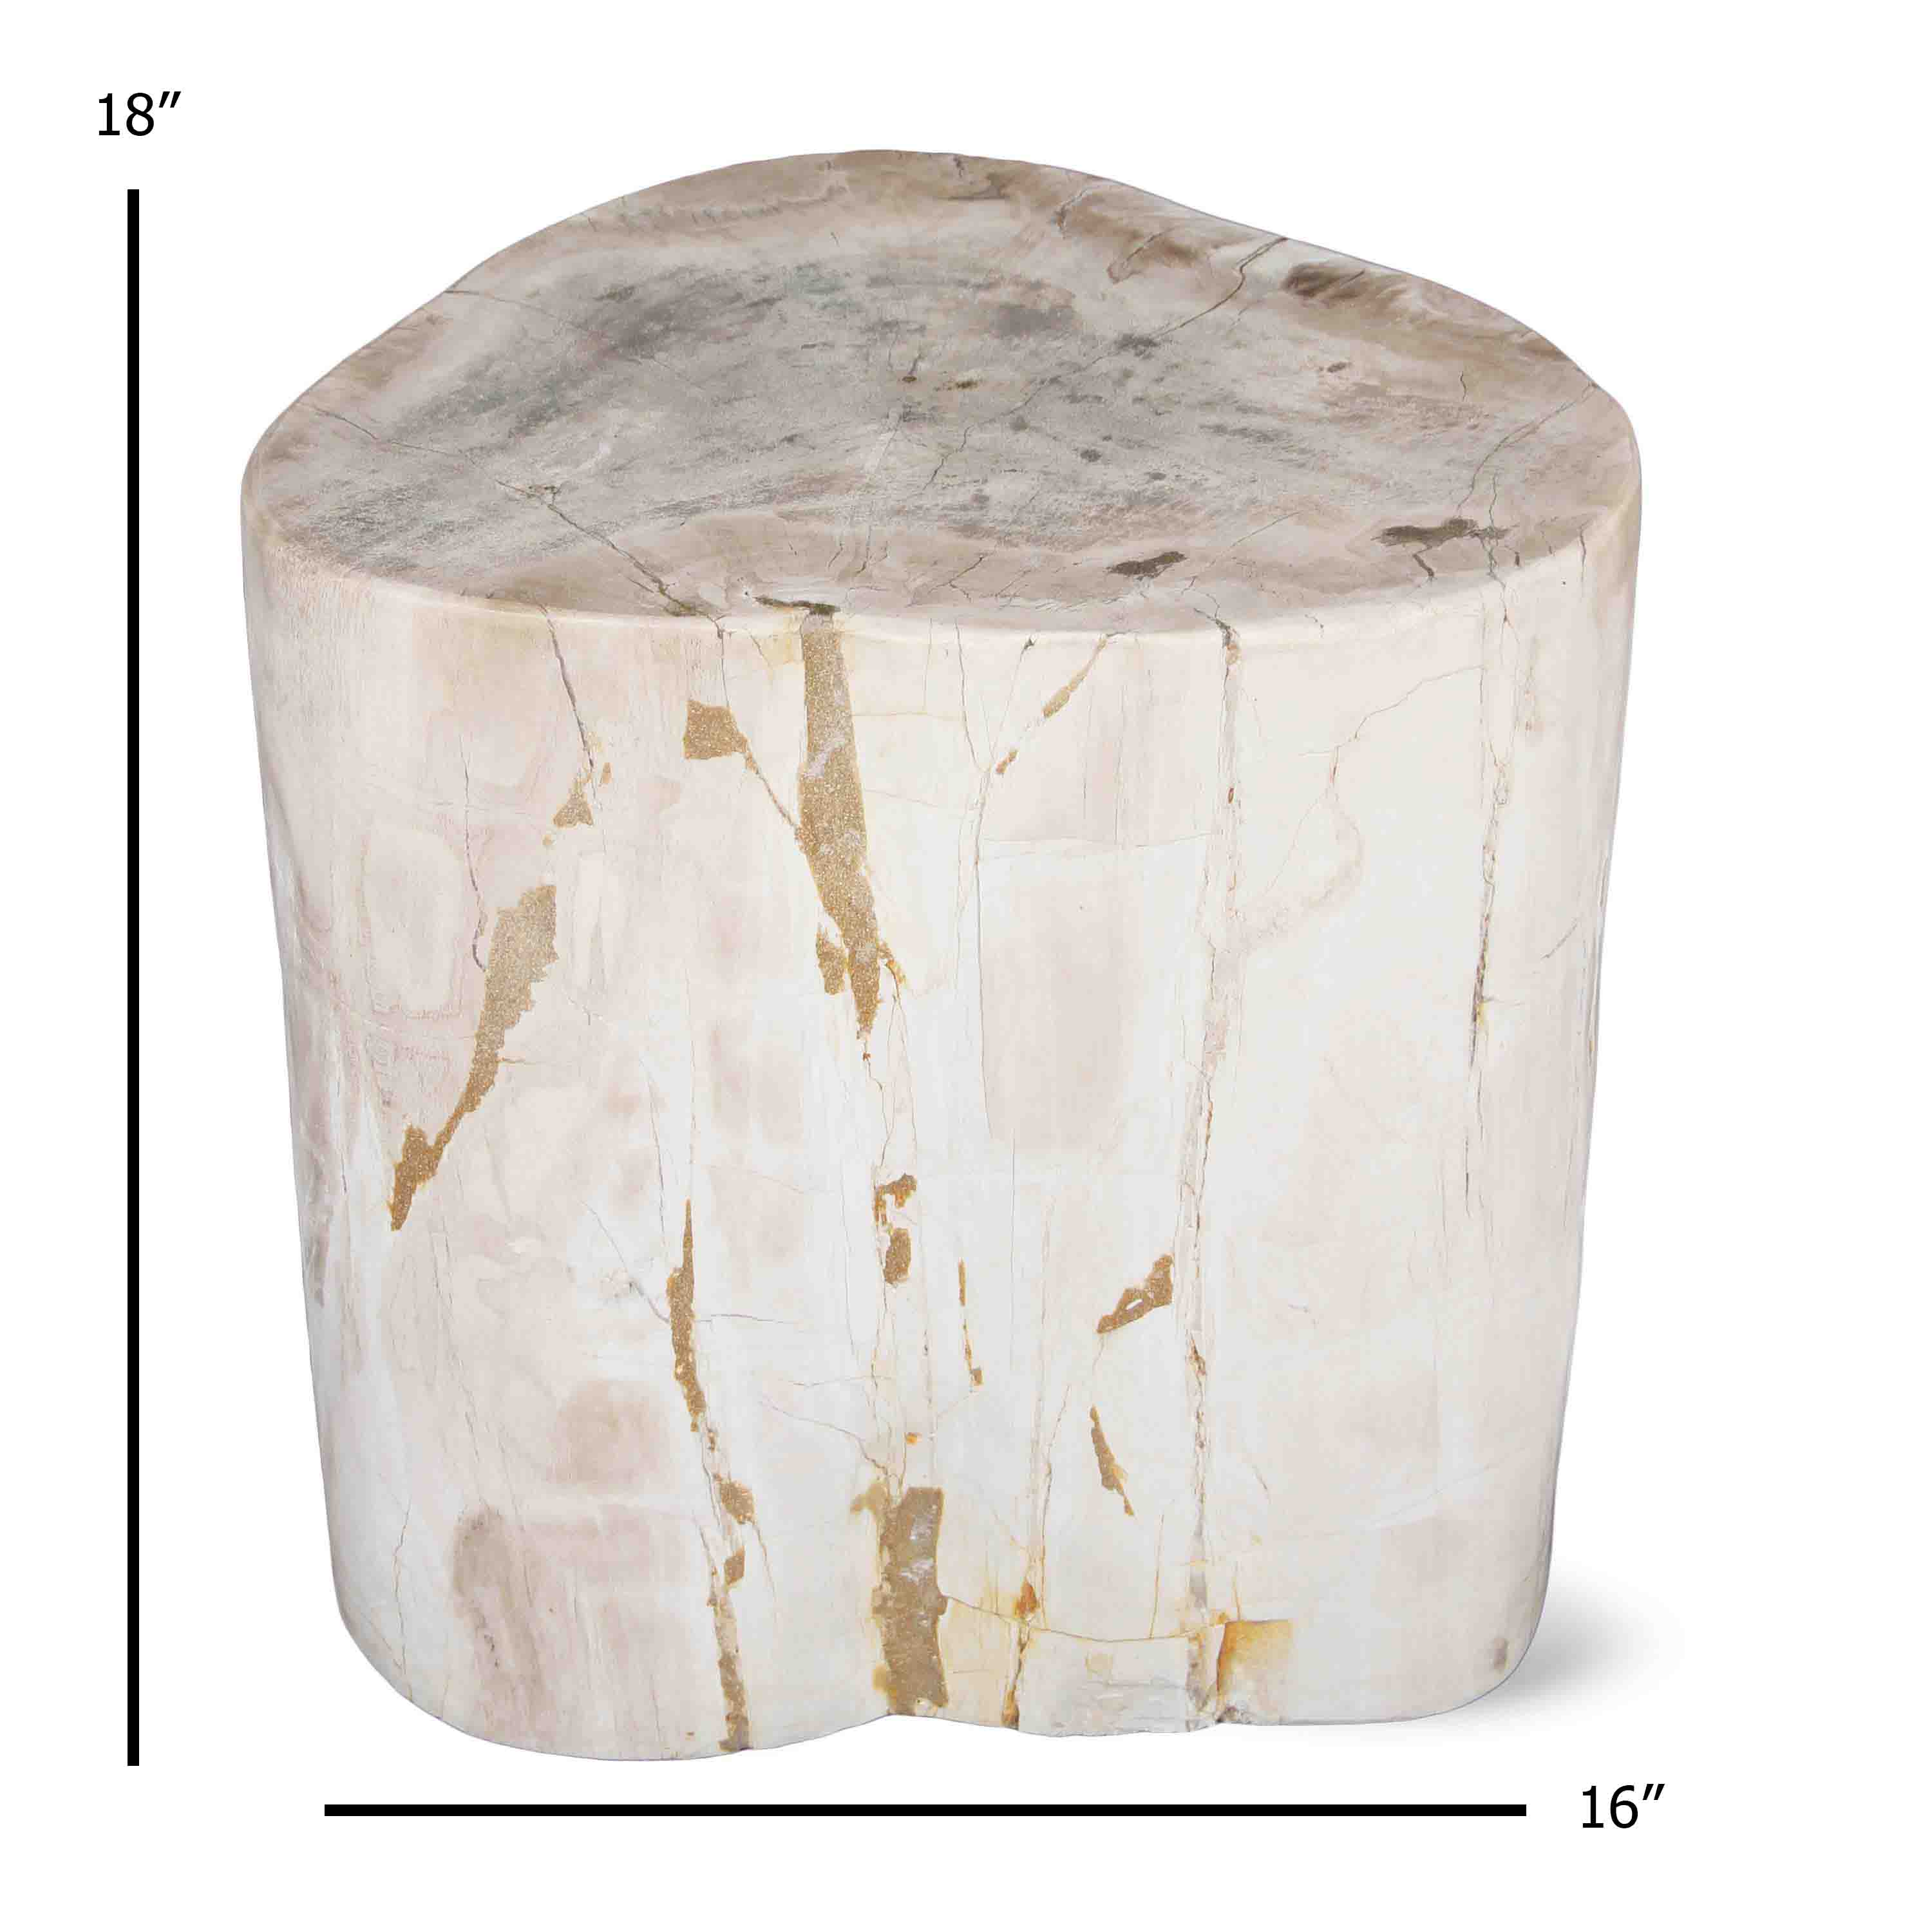 Kalifano Petrified Wood Natural Polished Petrified Wood Stool from Indonesia - 18" / 227 lbs PWS4100.001